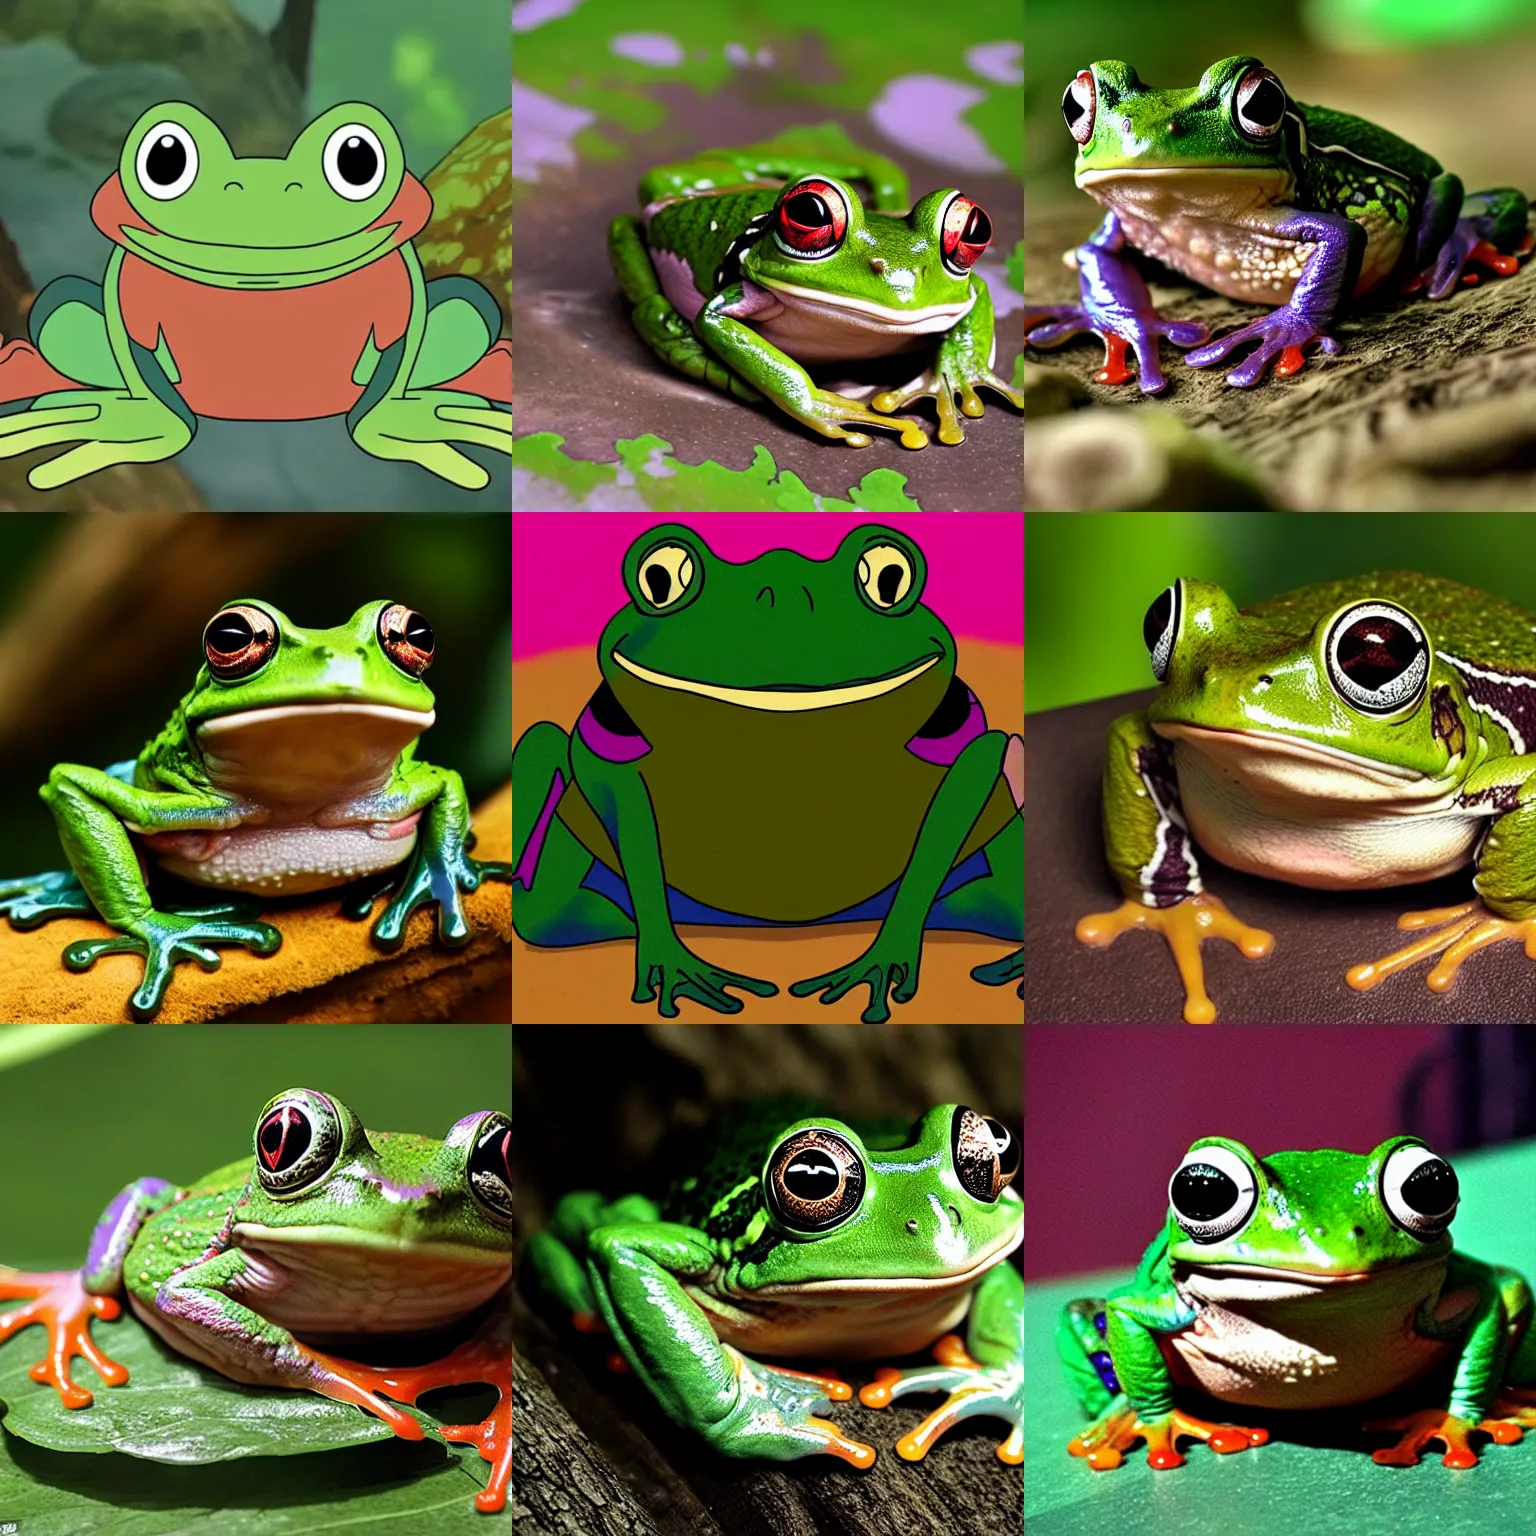 Prompt: a very grumpy frog, disney,'amphibia'